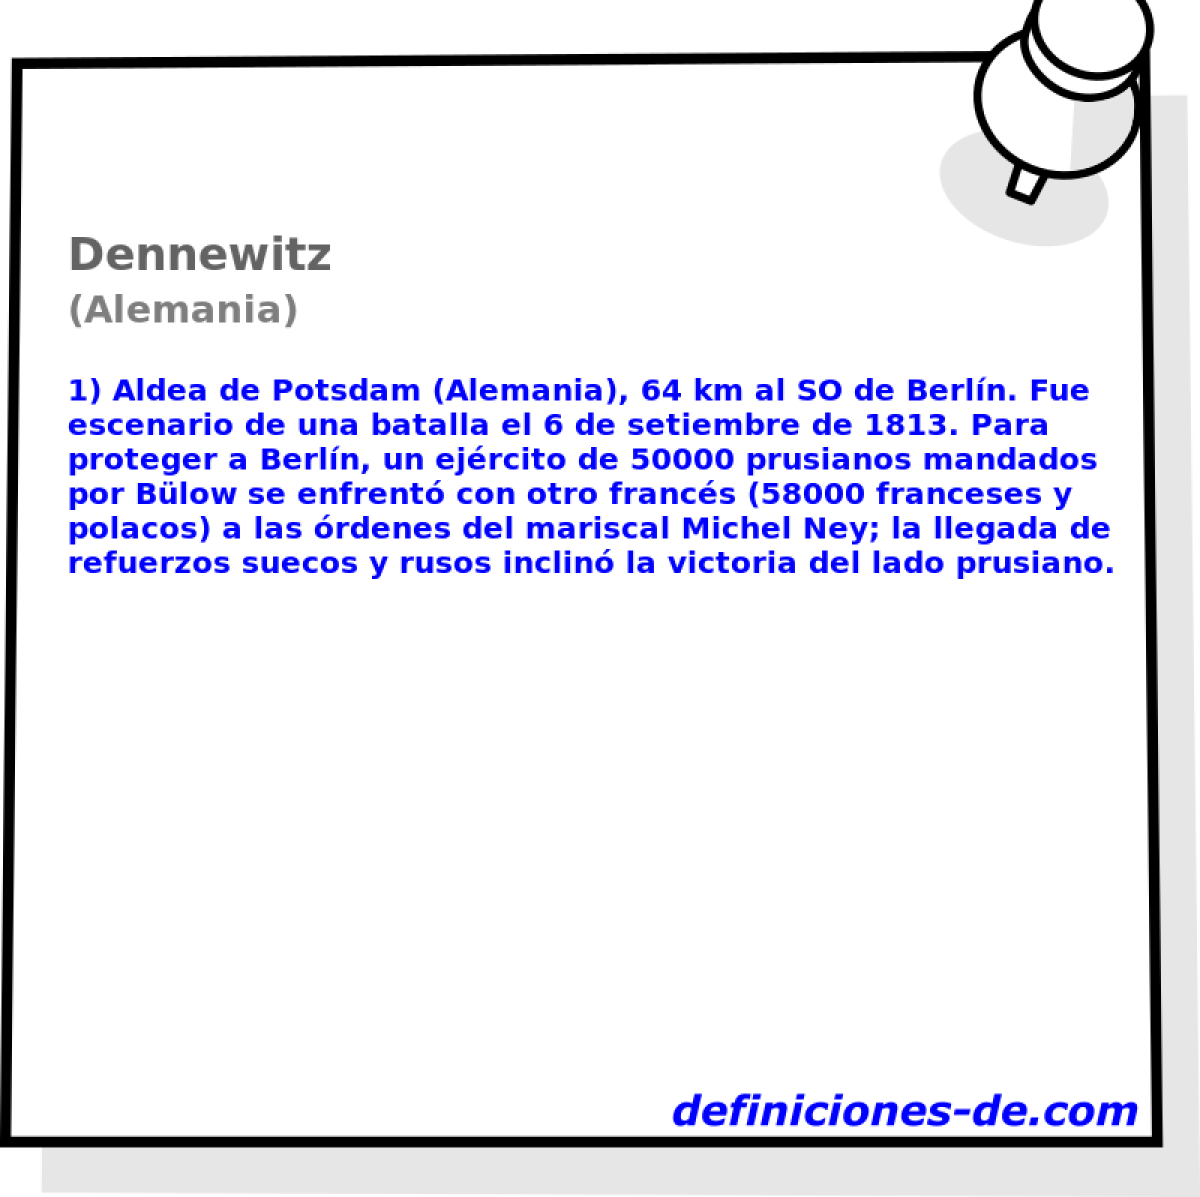 Dennewitz (Alemania)